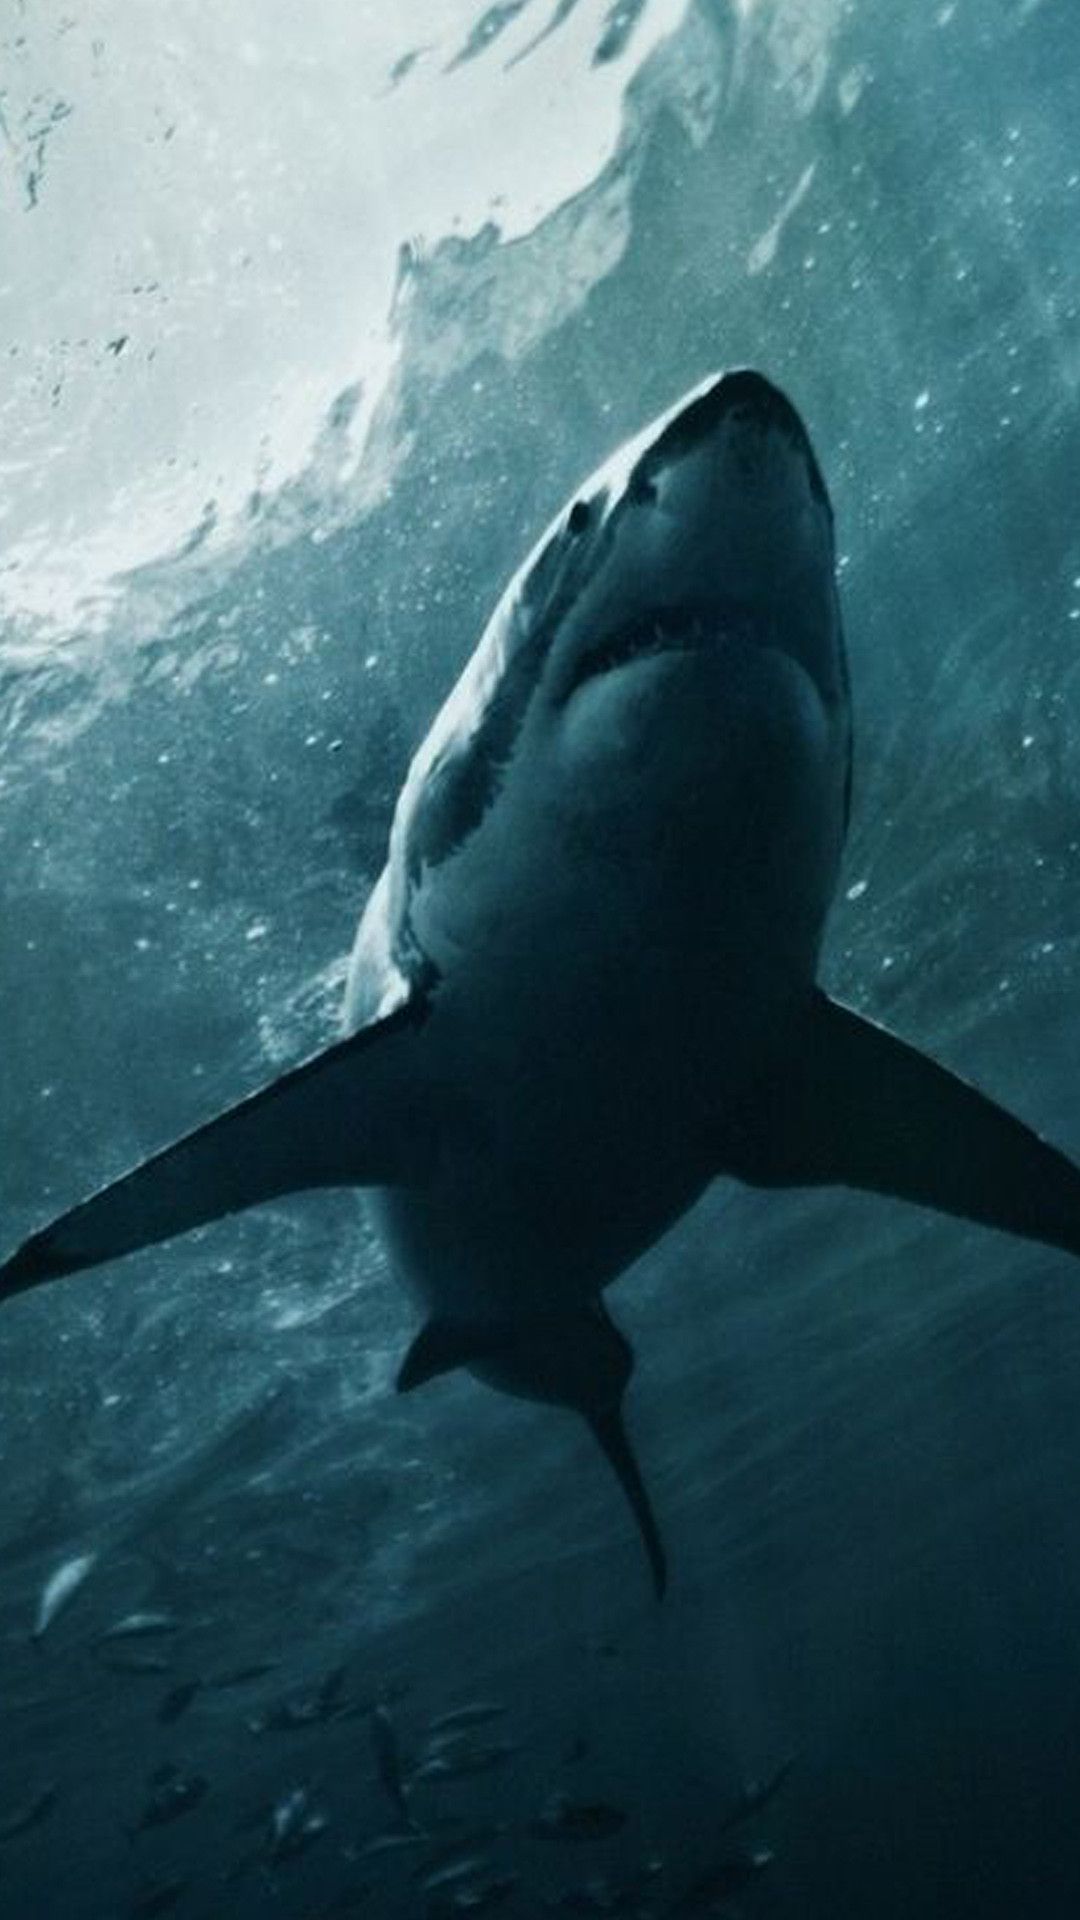 Shark under the water Wallpaper 4k Ultra HD ID:7781